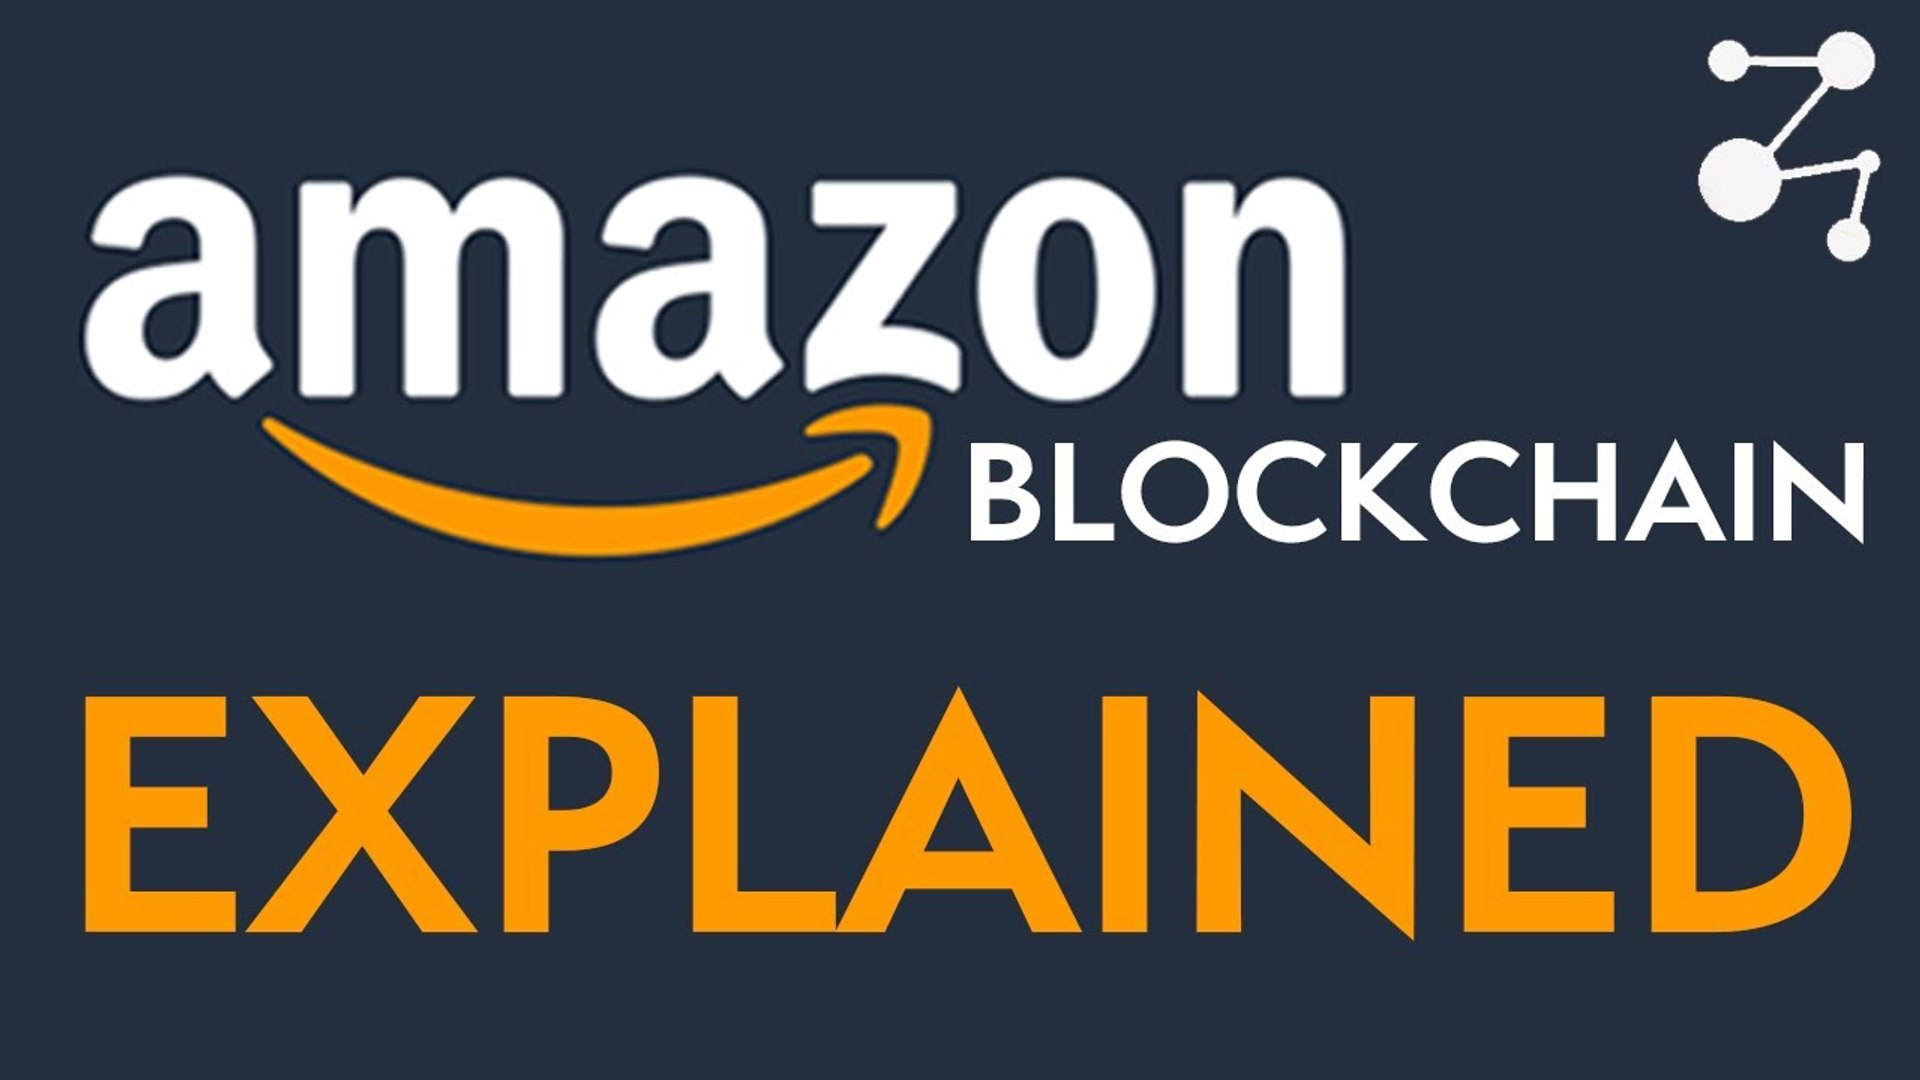 Amazon Managed Blockchain: The Future of Enterprise Blockchain Solutions | Blockchain Central